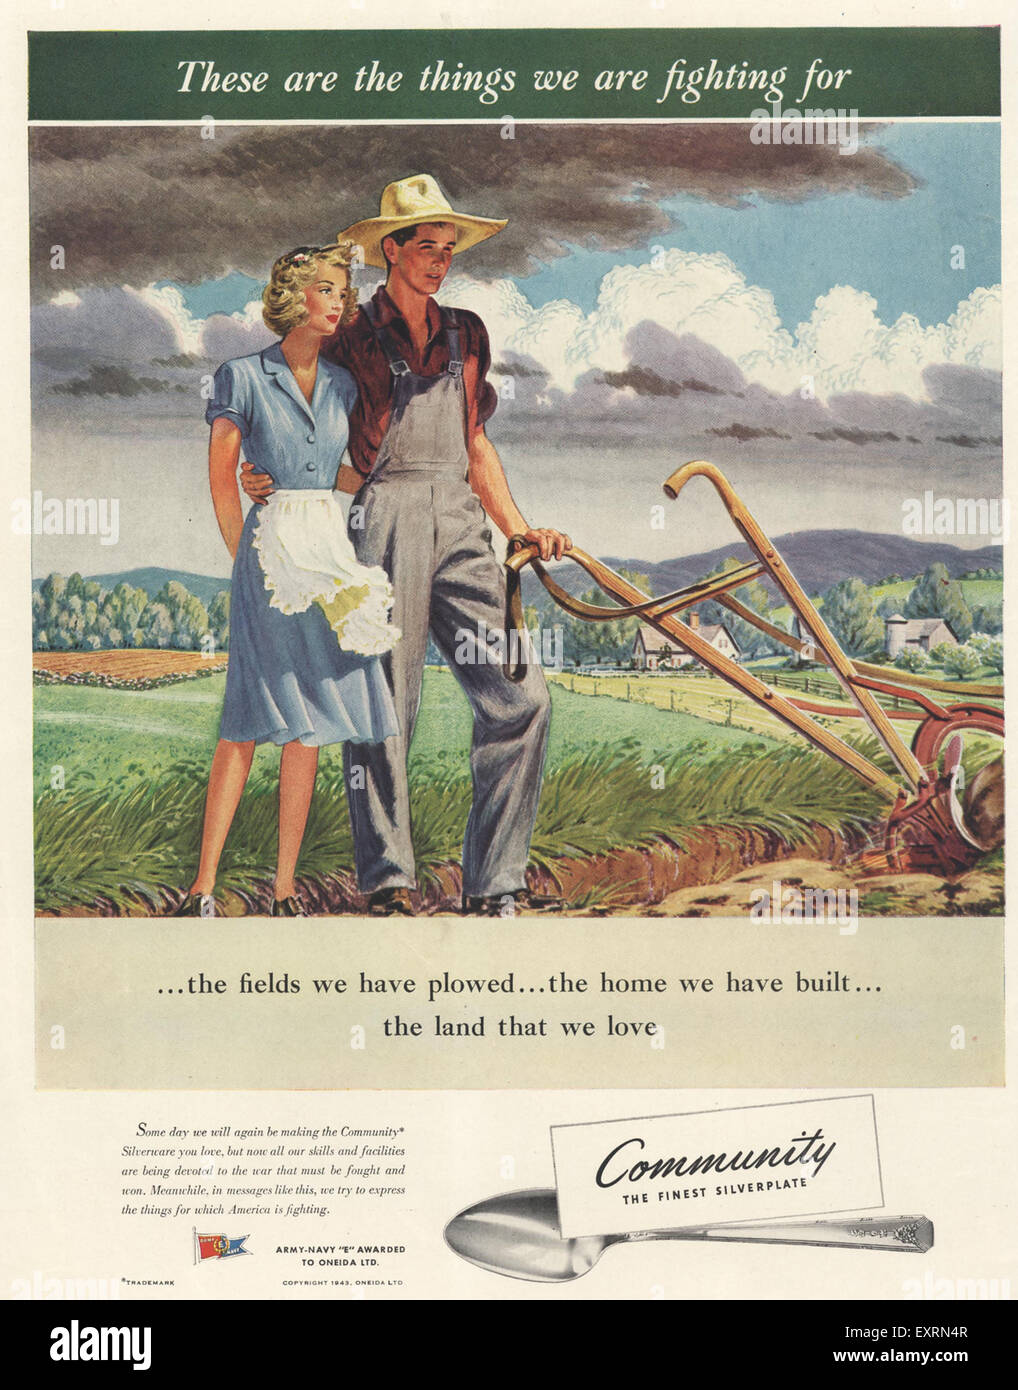 1940s USA Community Magazine Advert Stock Photo